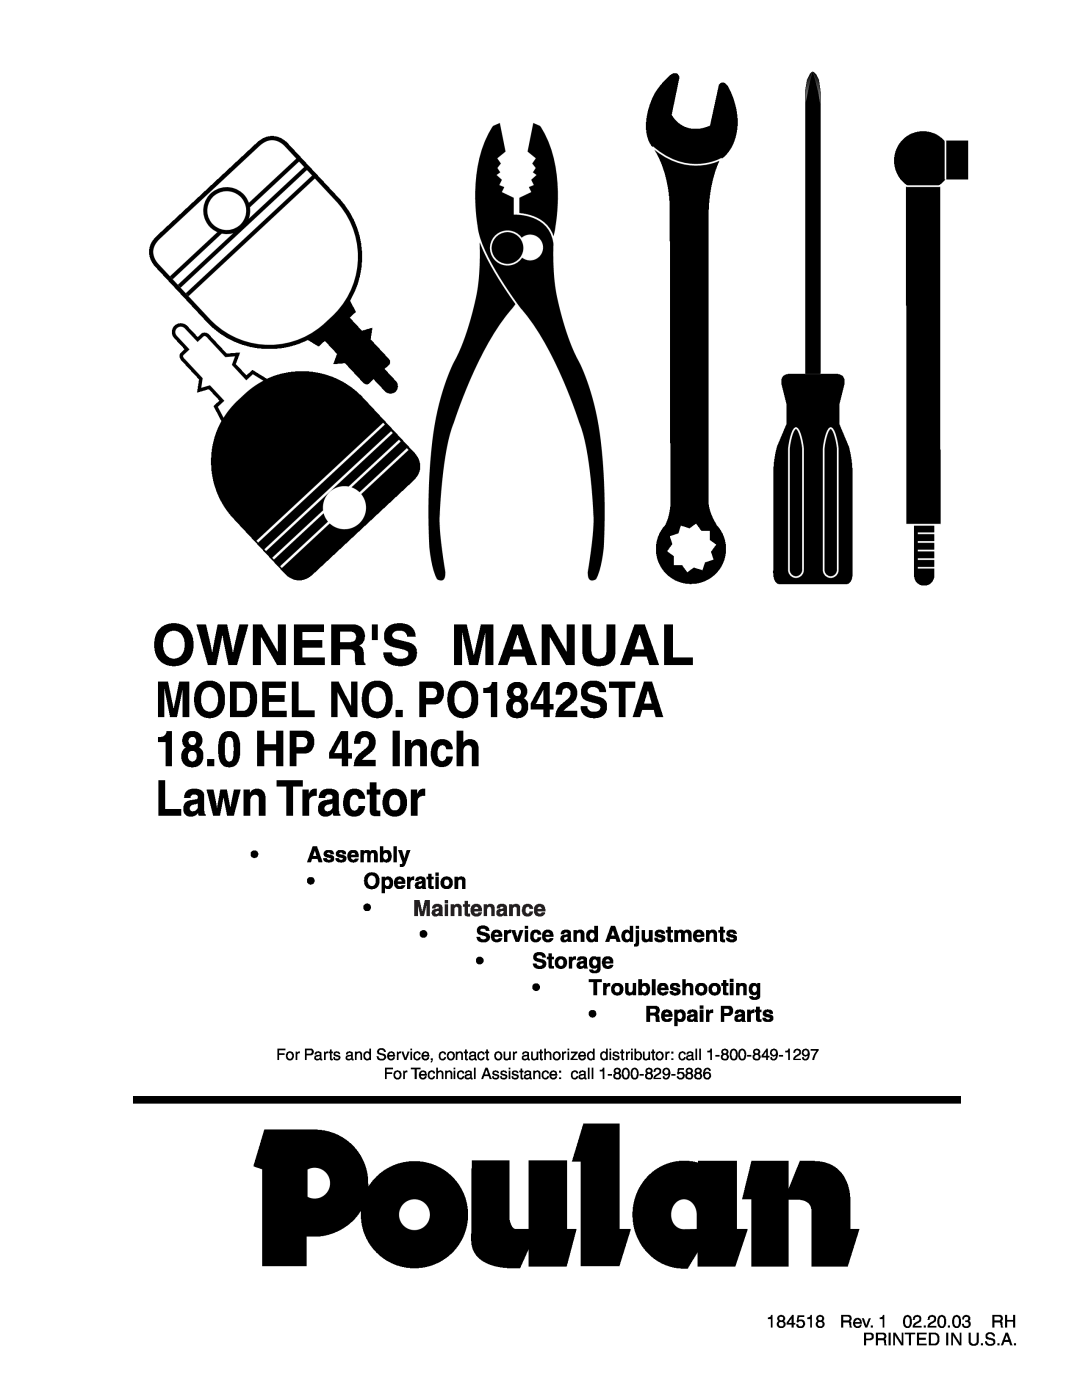 Poulan 954569554 manual MODEL NO. PO1842STA 18.0 HP 42 Inch Lawn Tractor, 184518 Rev. 1 02.20.03 RH PRINTED IN U.S.A 